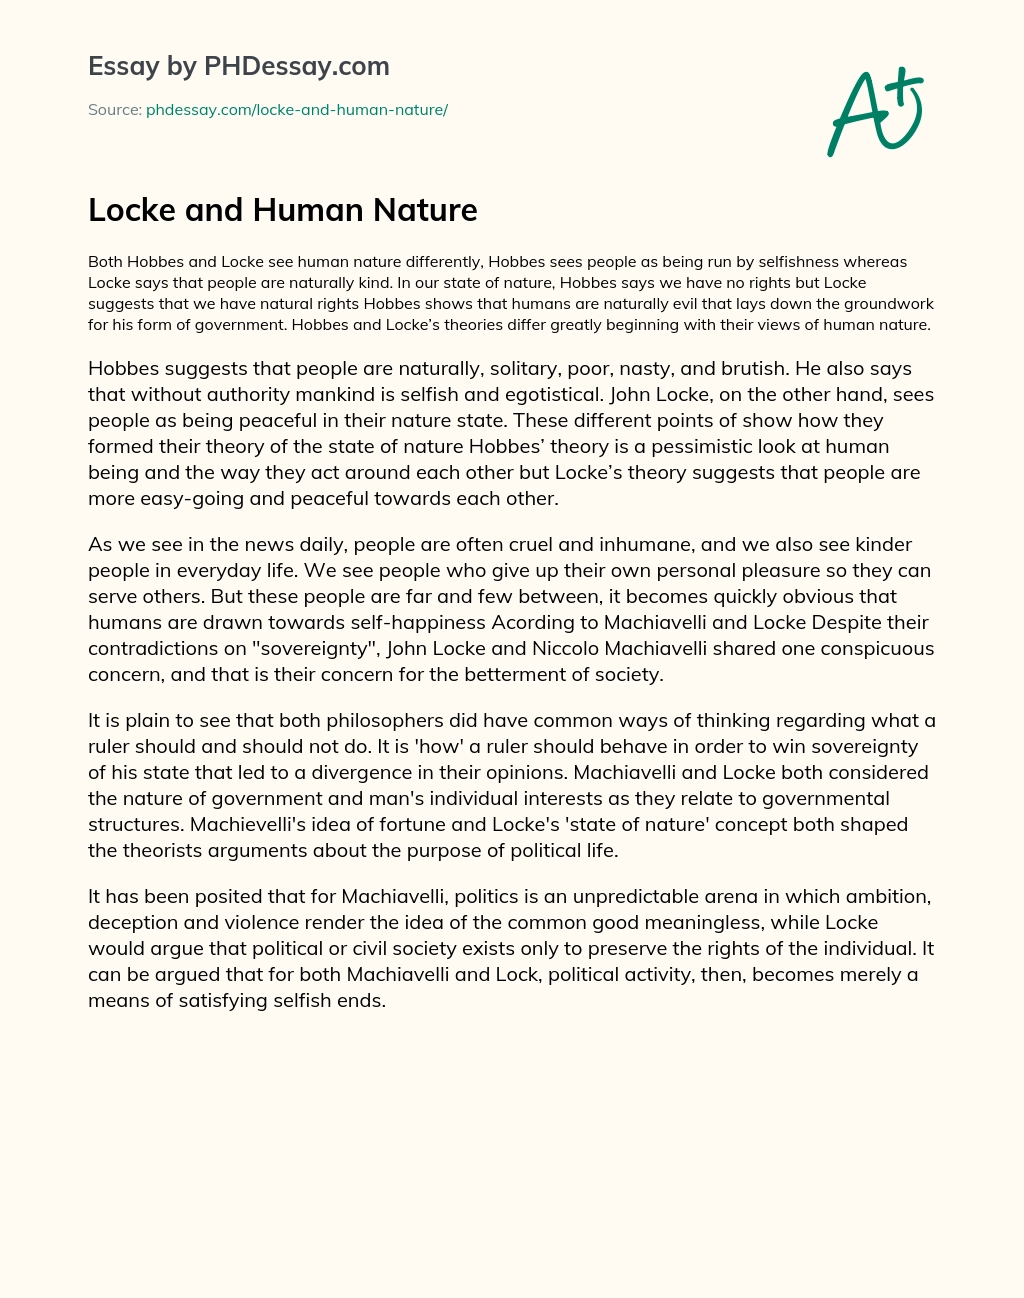 Locke and Human Nature essay